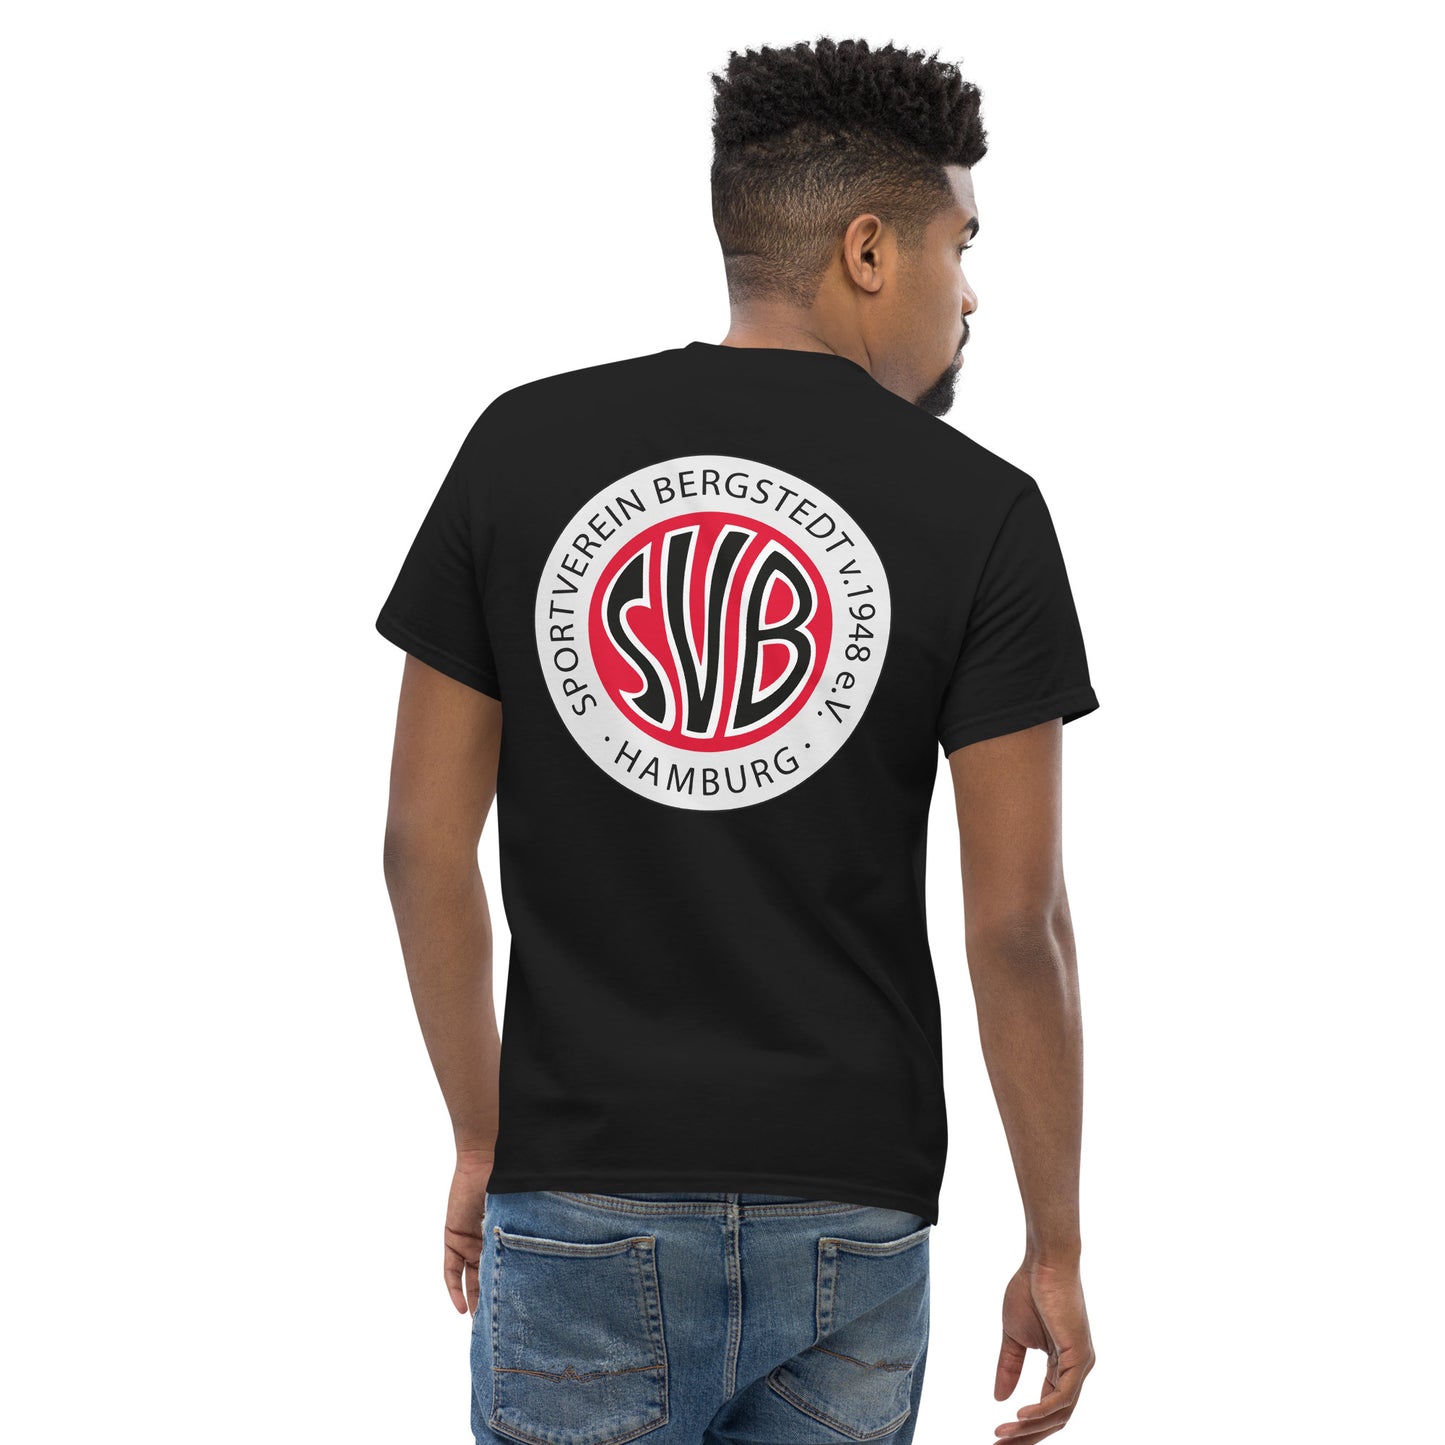 SVB Shirt │T-Shirt - Make it happen │Druck